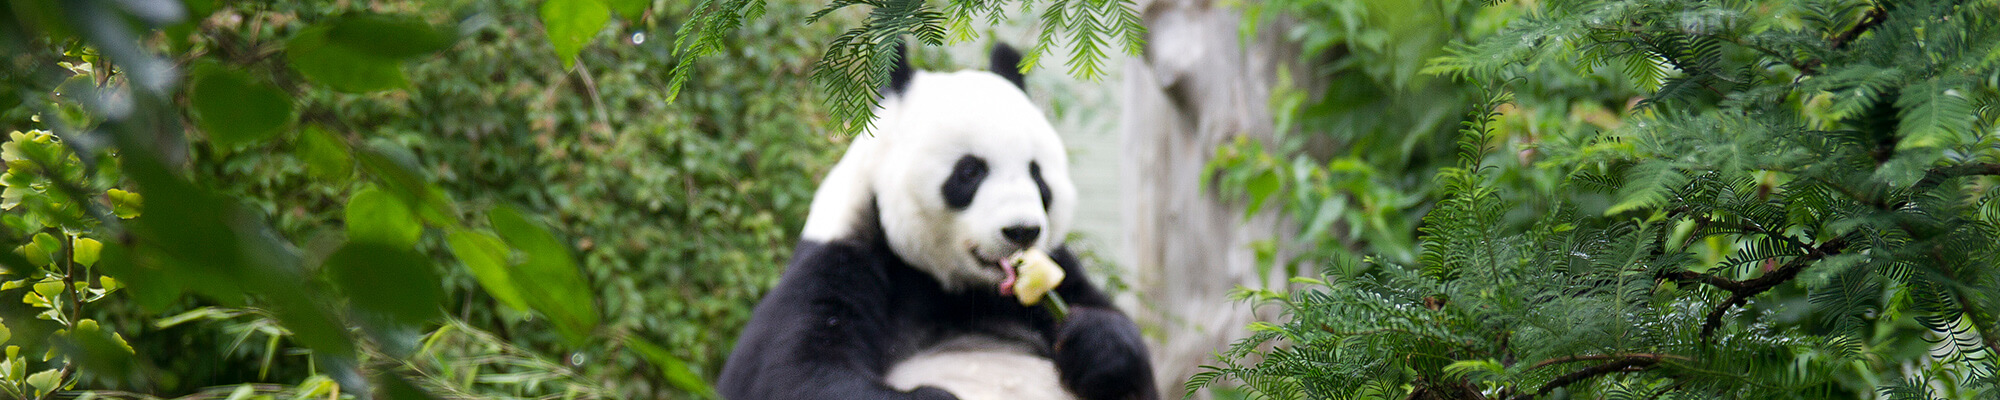 A giant panda eating food